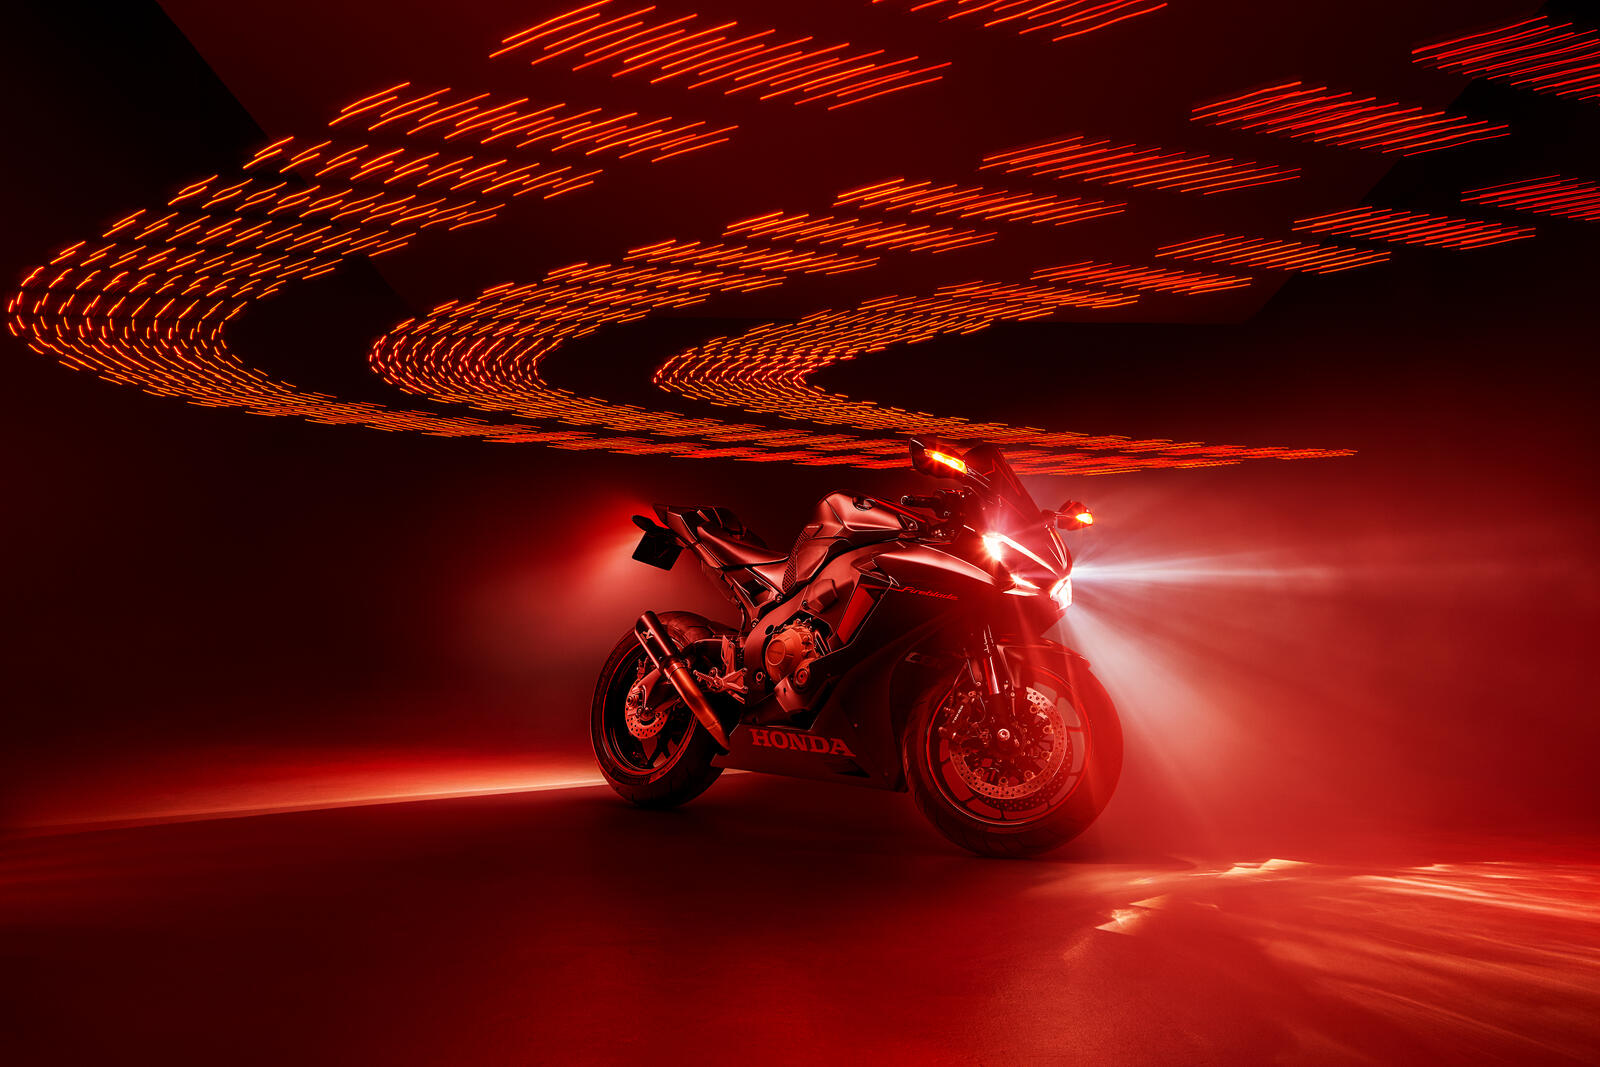 Wallpapers Honda motorcycles red on the desktop